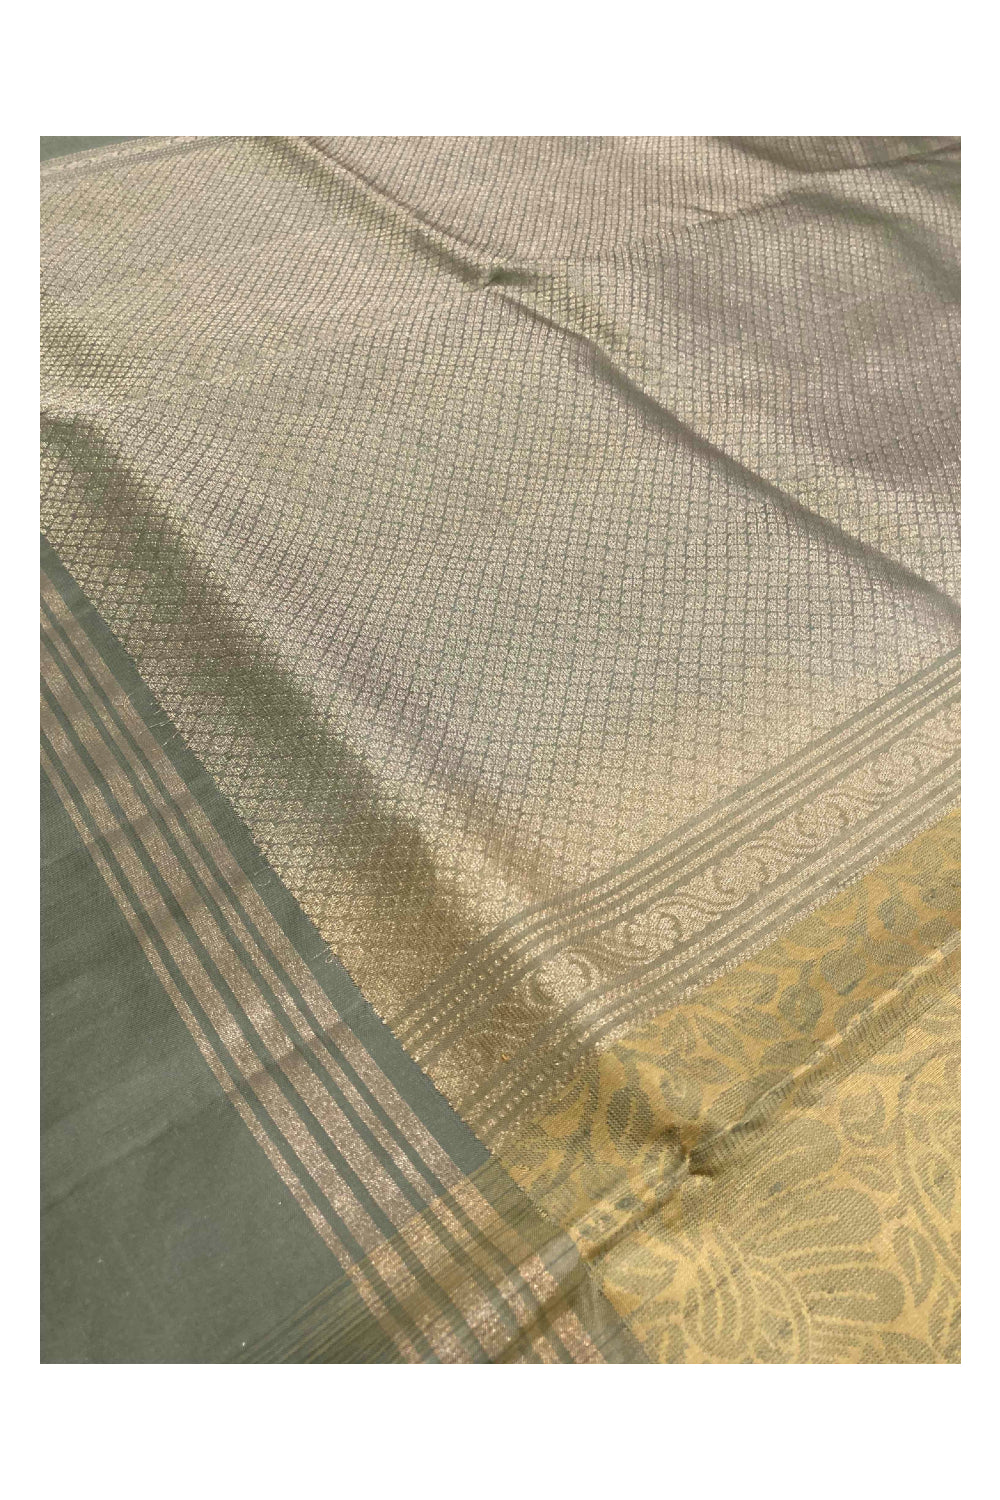 Southloom Handloom Pure Silk Kanchipuram Saree in Light Green Floral Motifs